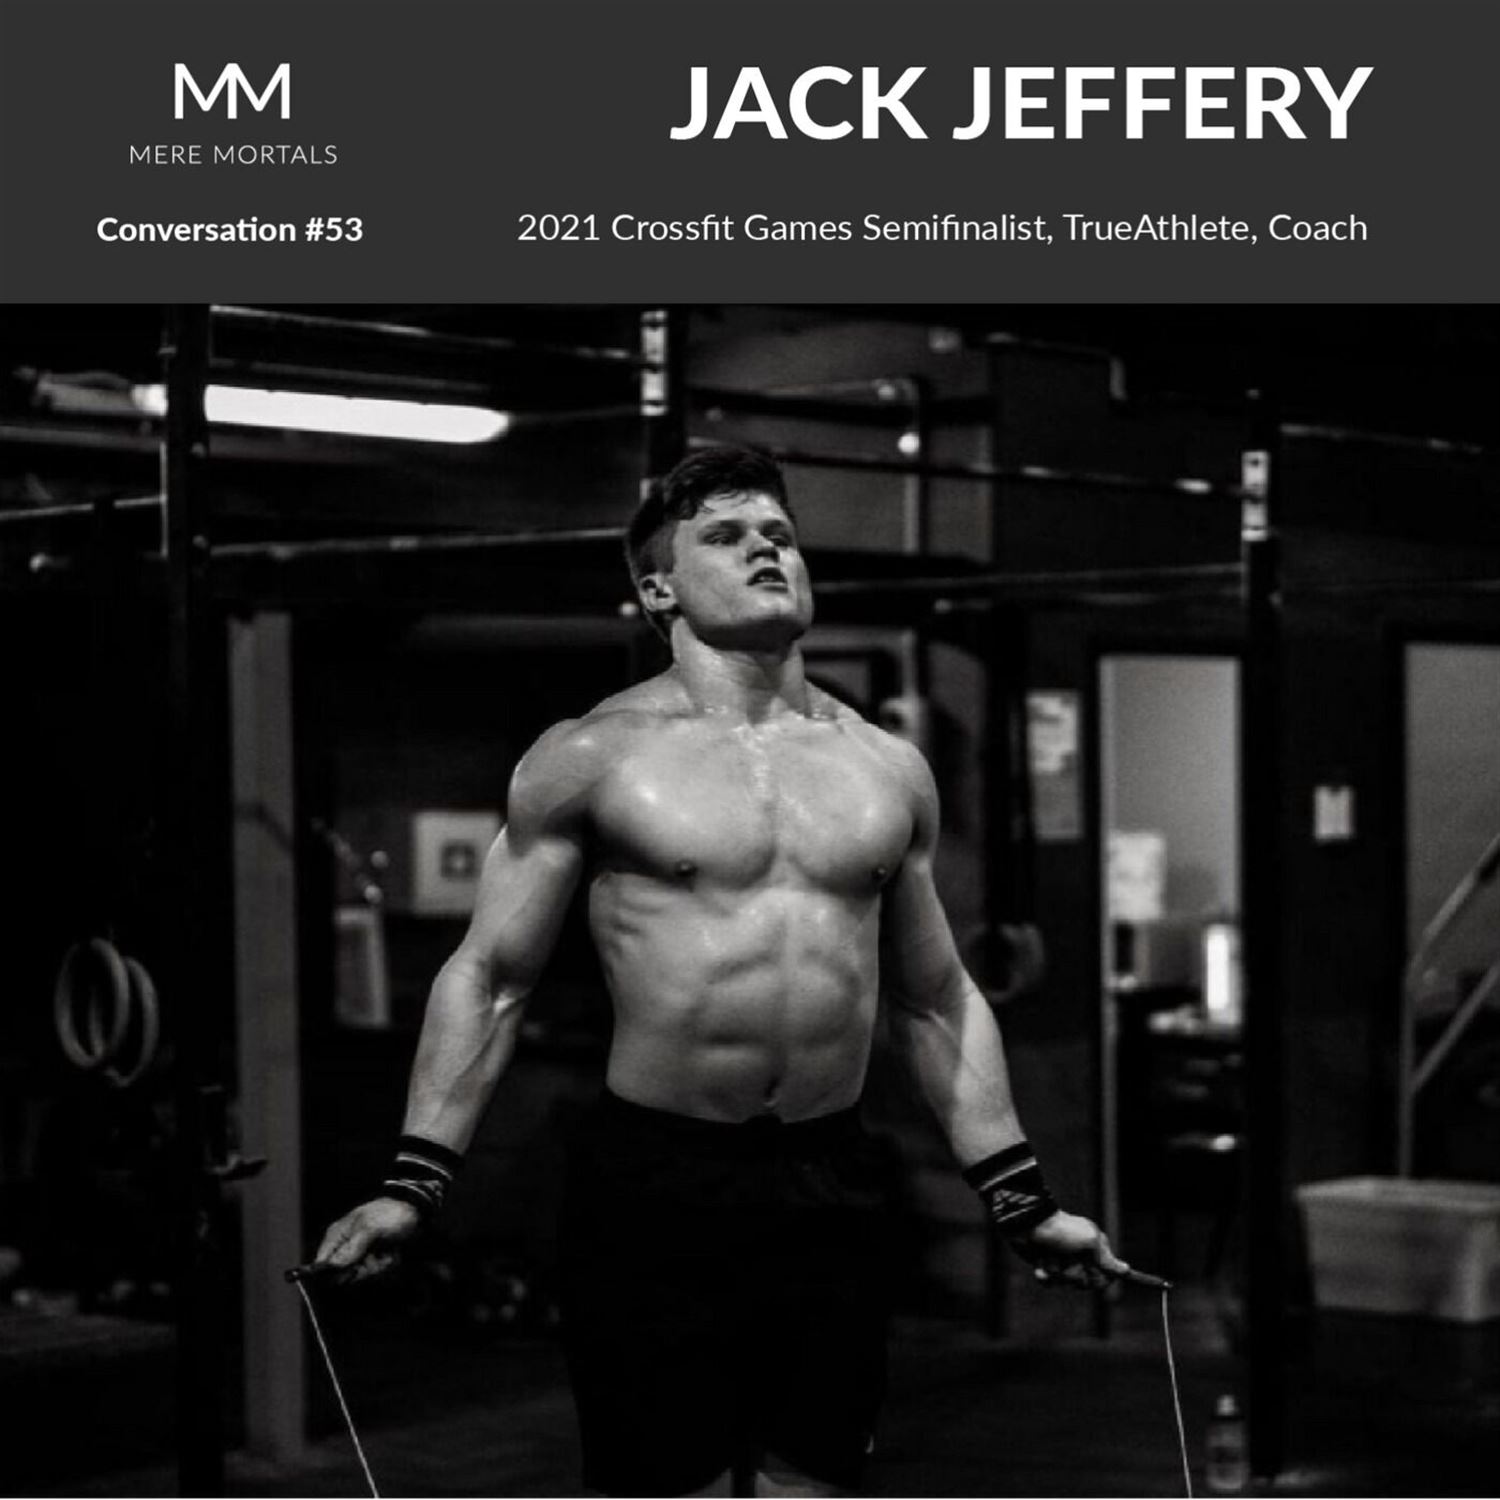 JACK JEFFERY | 2021 Crossfit Games Semifinalist, TrueAthlete & Coach